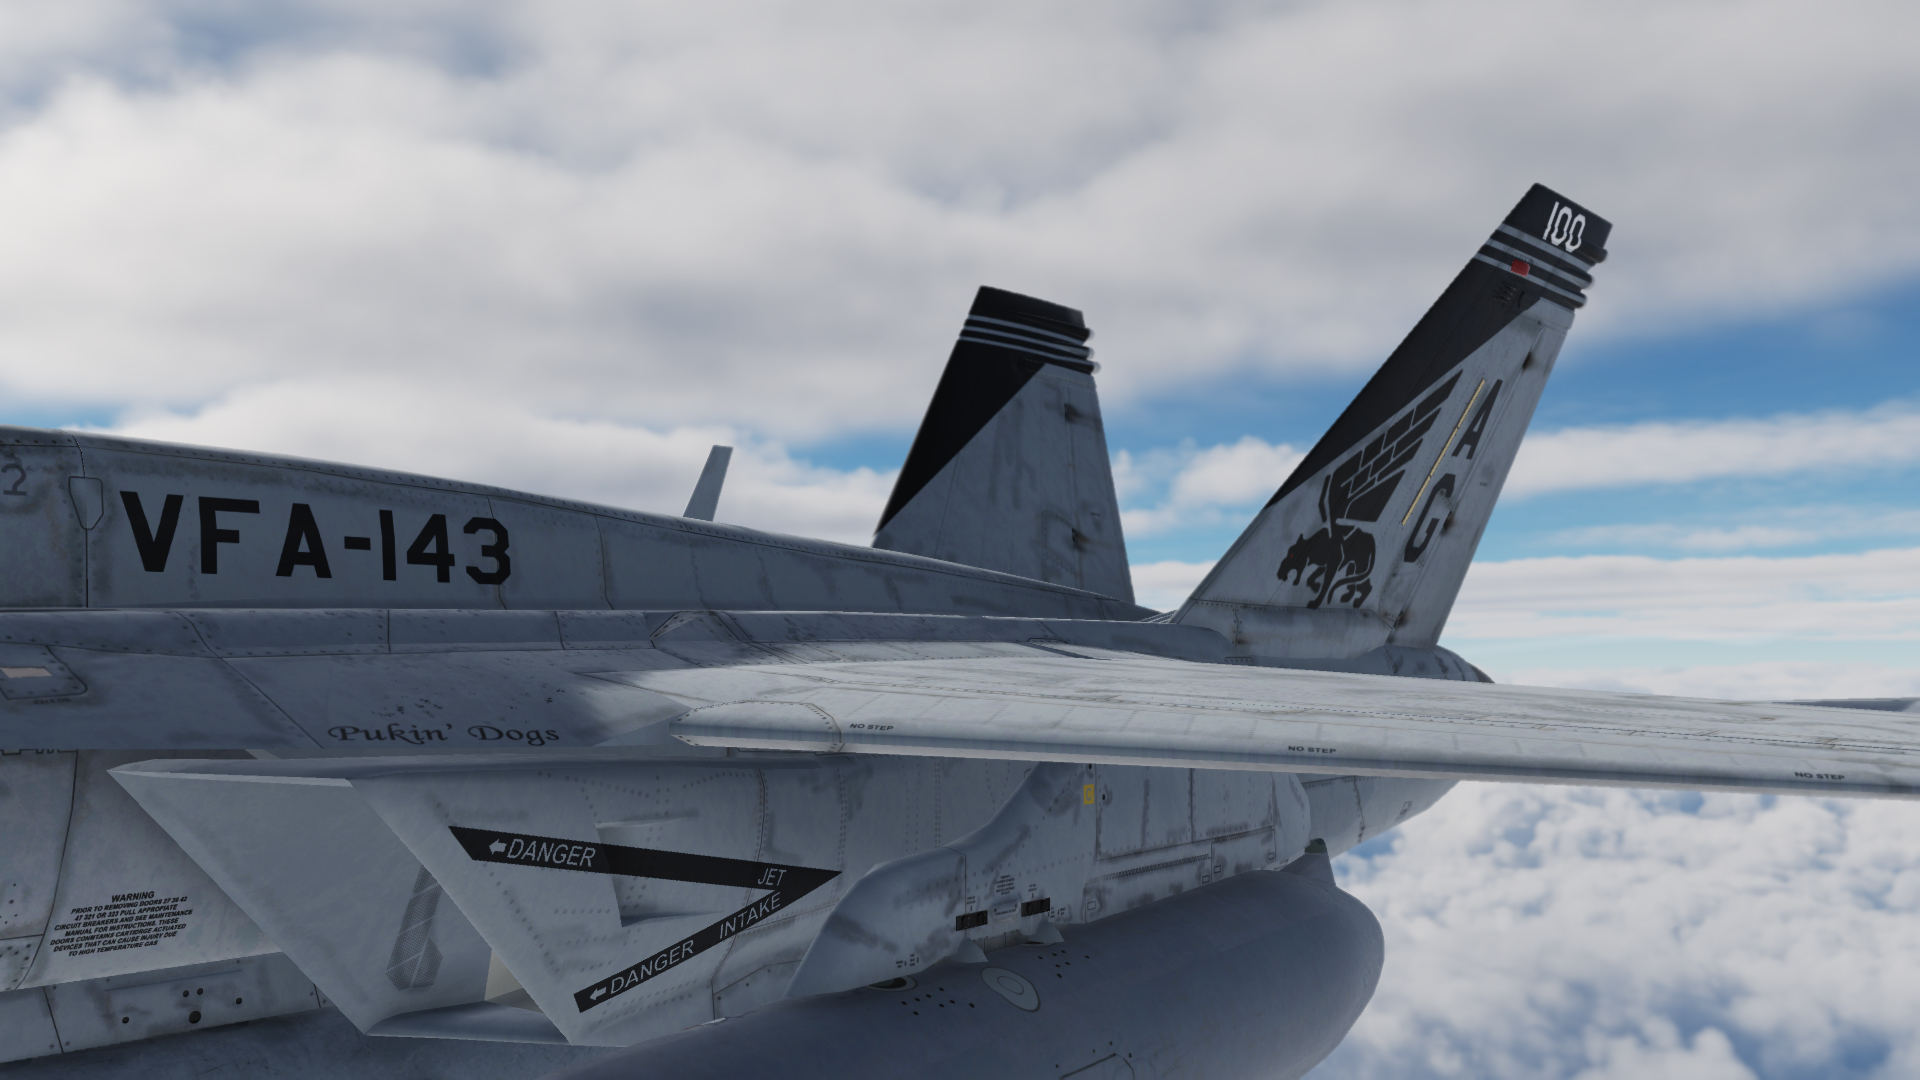 VFA-143 (Pukin' Dogs) skin for Superbug F-18E mod (v1.8)